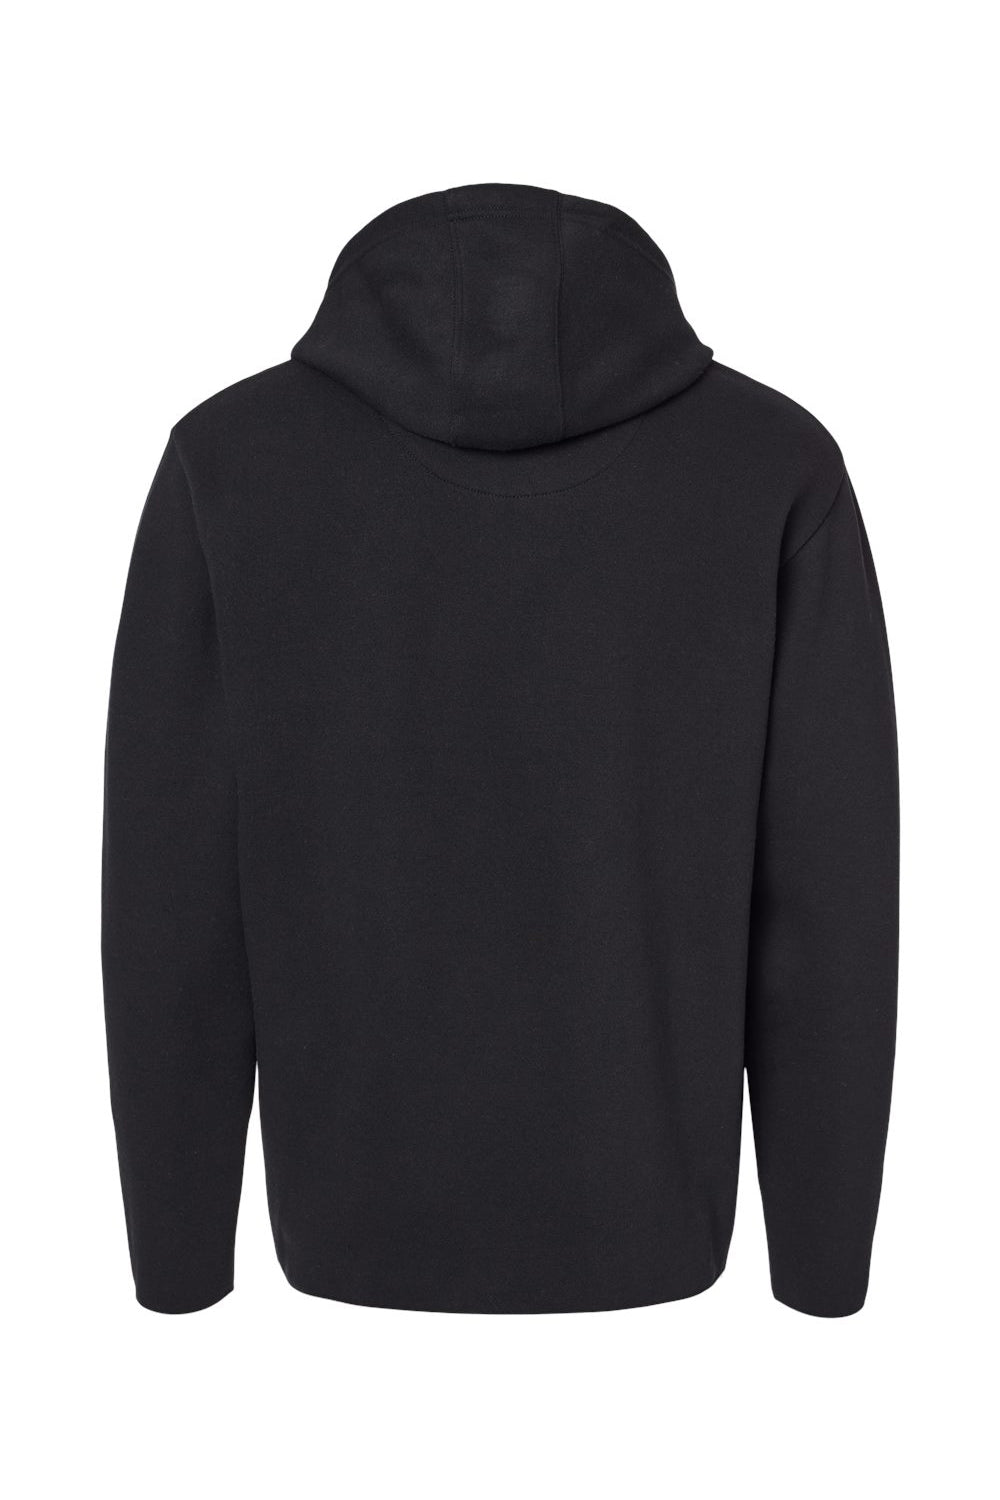 LAT 6996 Mens The Statement Fleece Hooded Sweatshirt Hoodie Black/Titanium Grey Flat Back